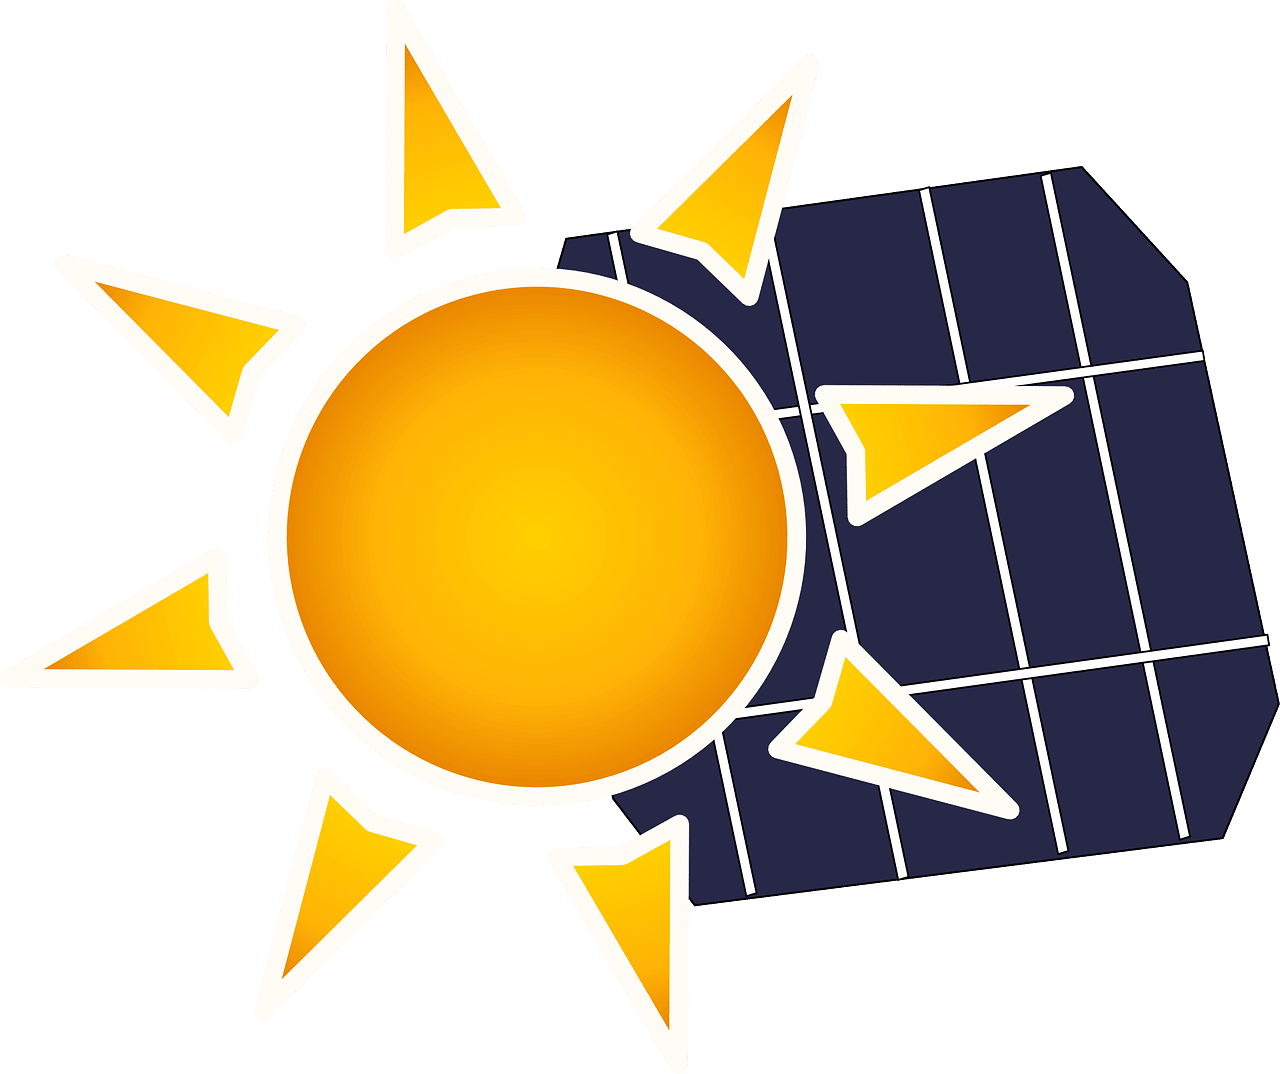 painel solar